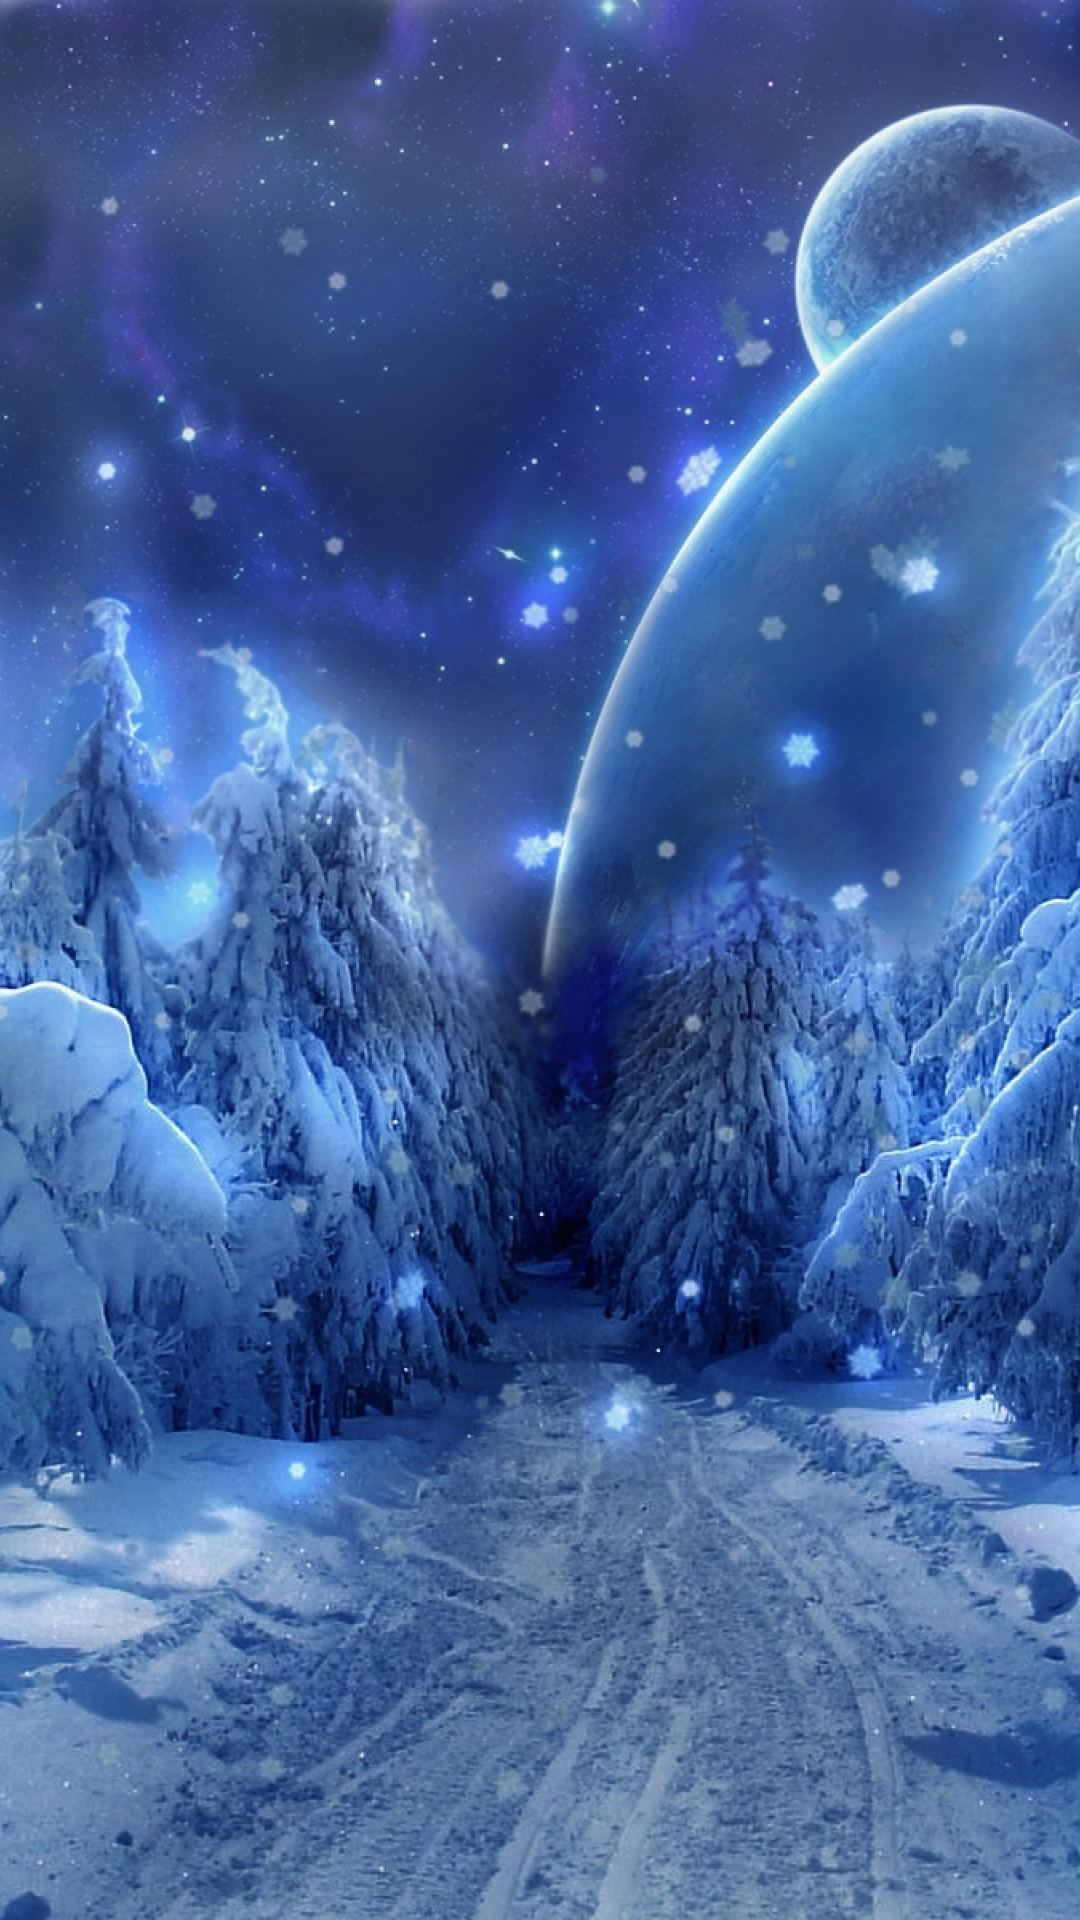 Download Winter, Snow, Fantasy, Art, Alien, Landscapes, Road Wallpaper in 1080x1920 Resolution